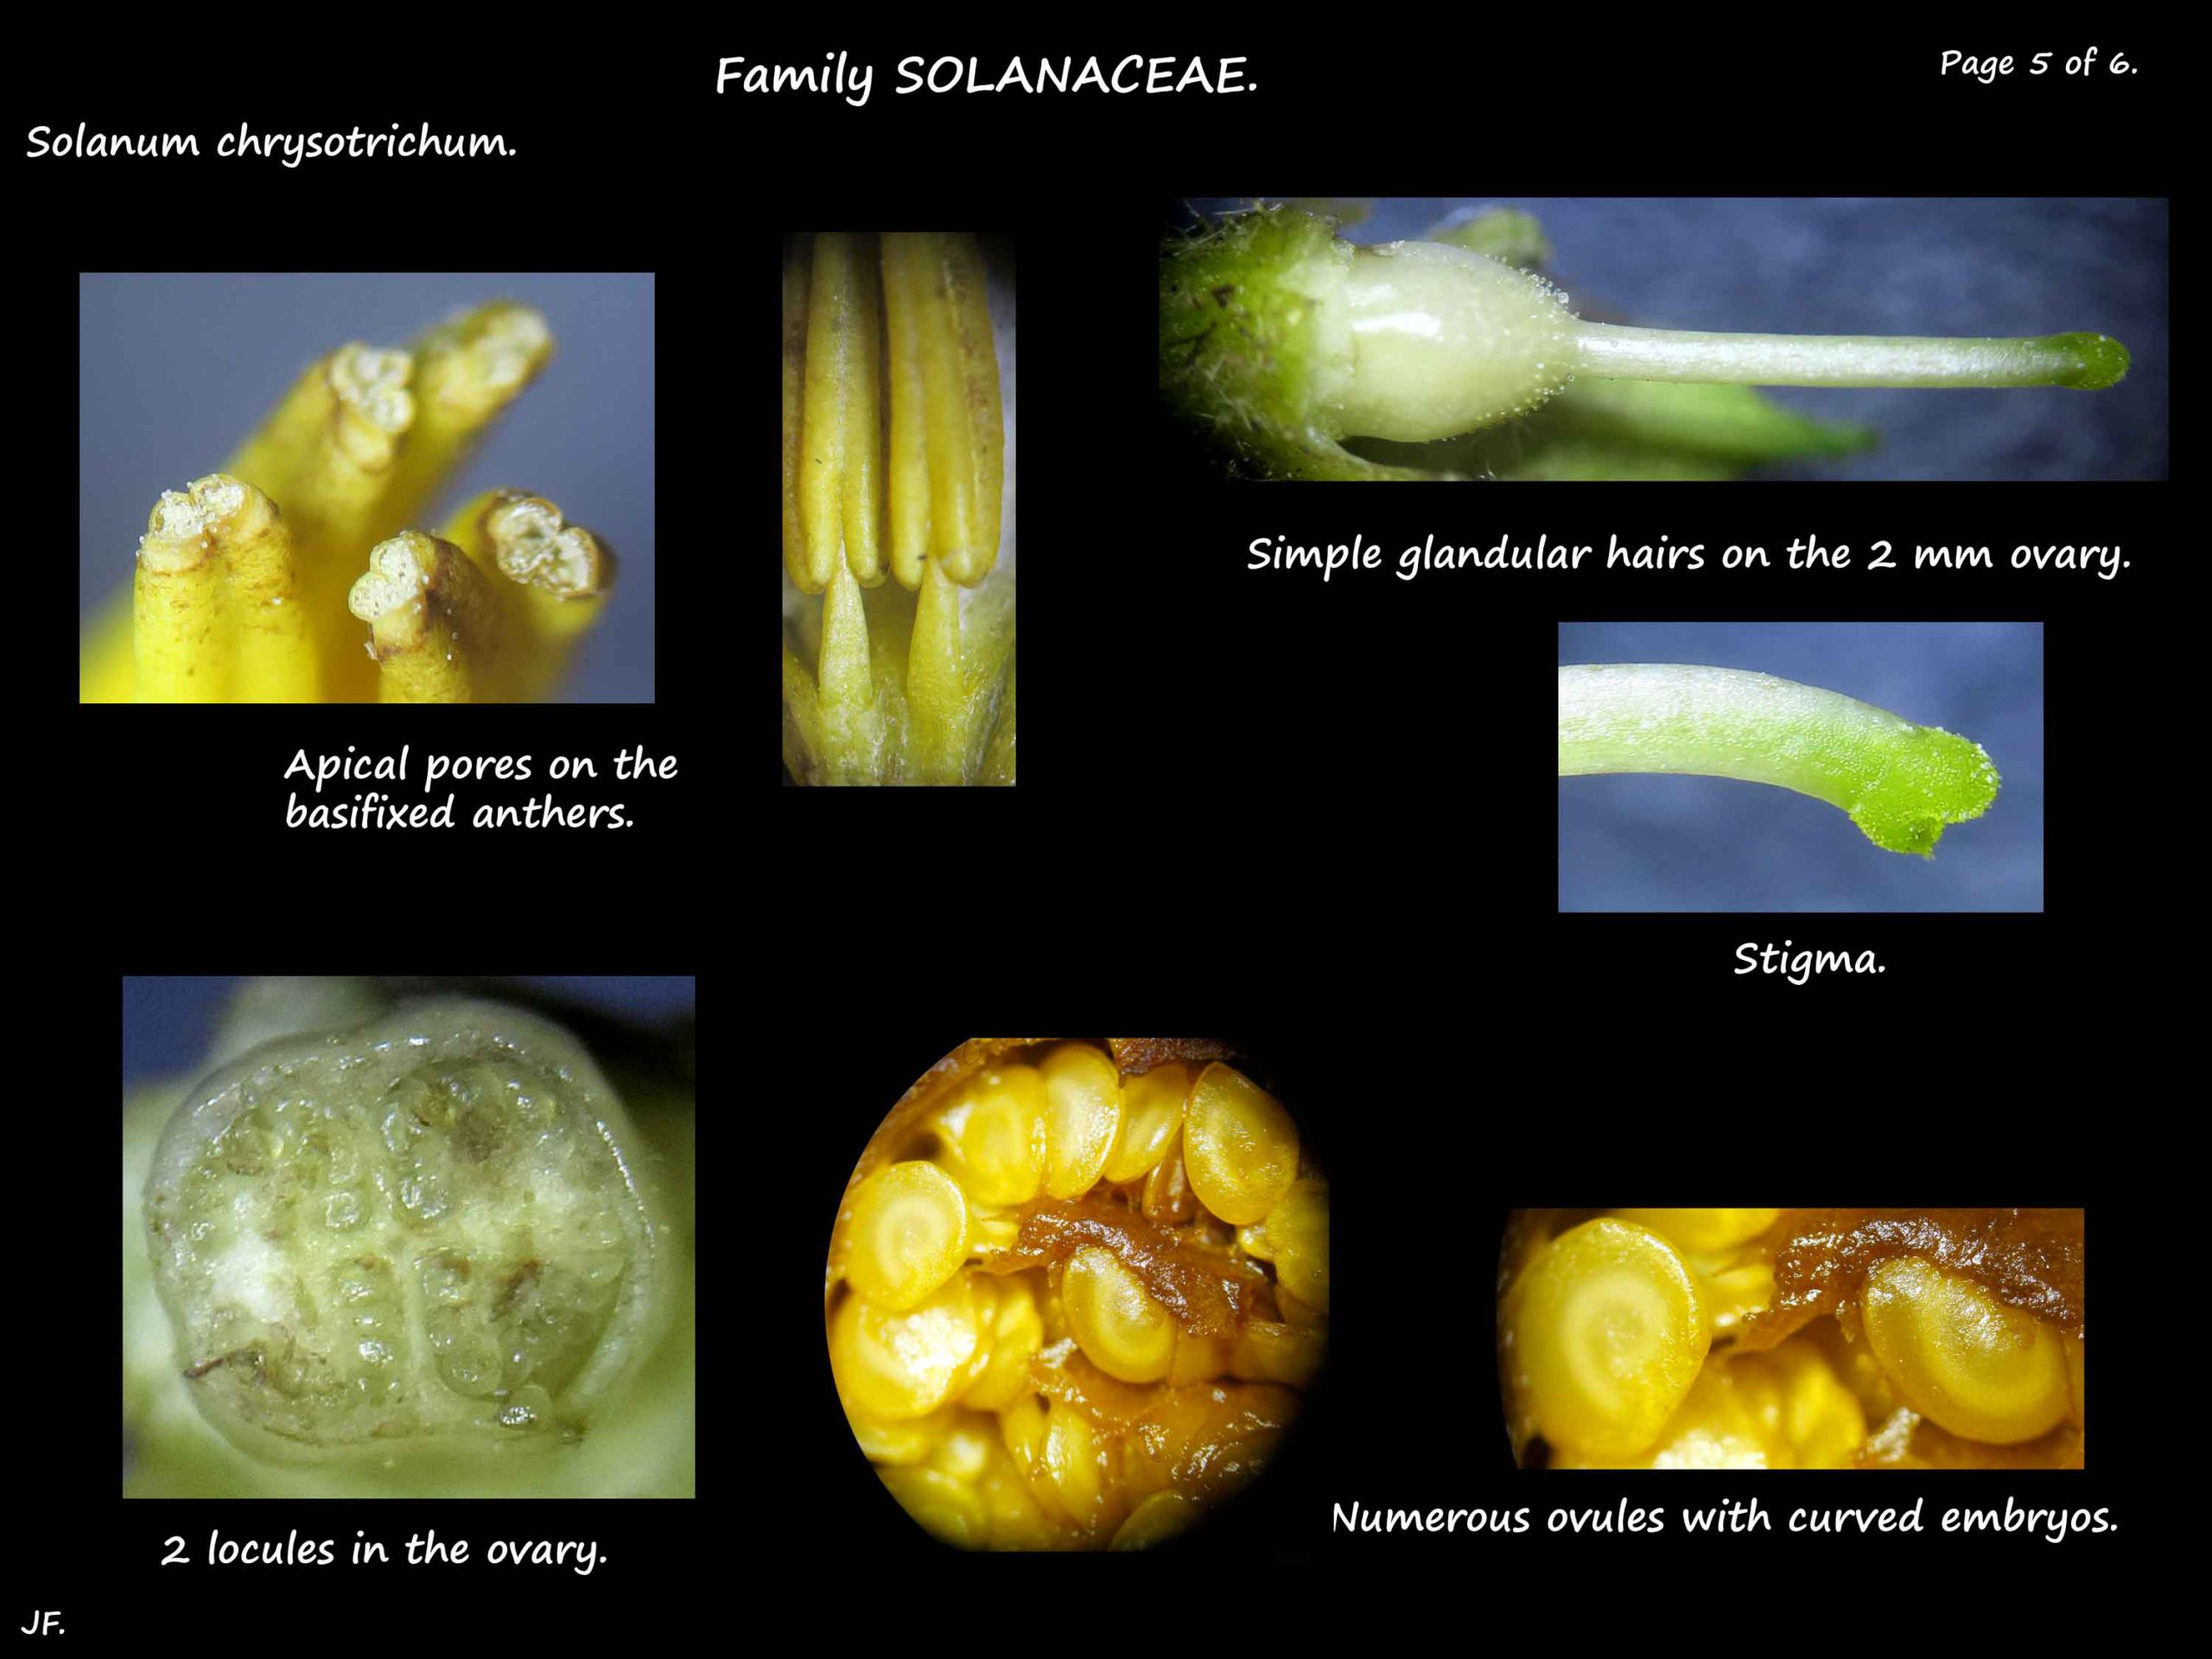 5 Solanum chrysotrichum stamens & ovary